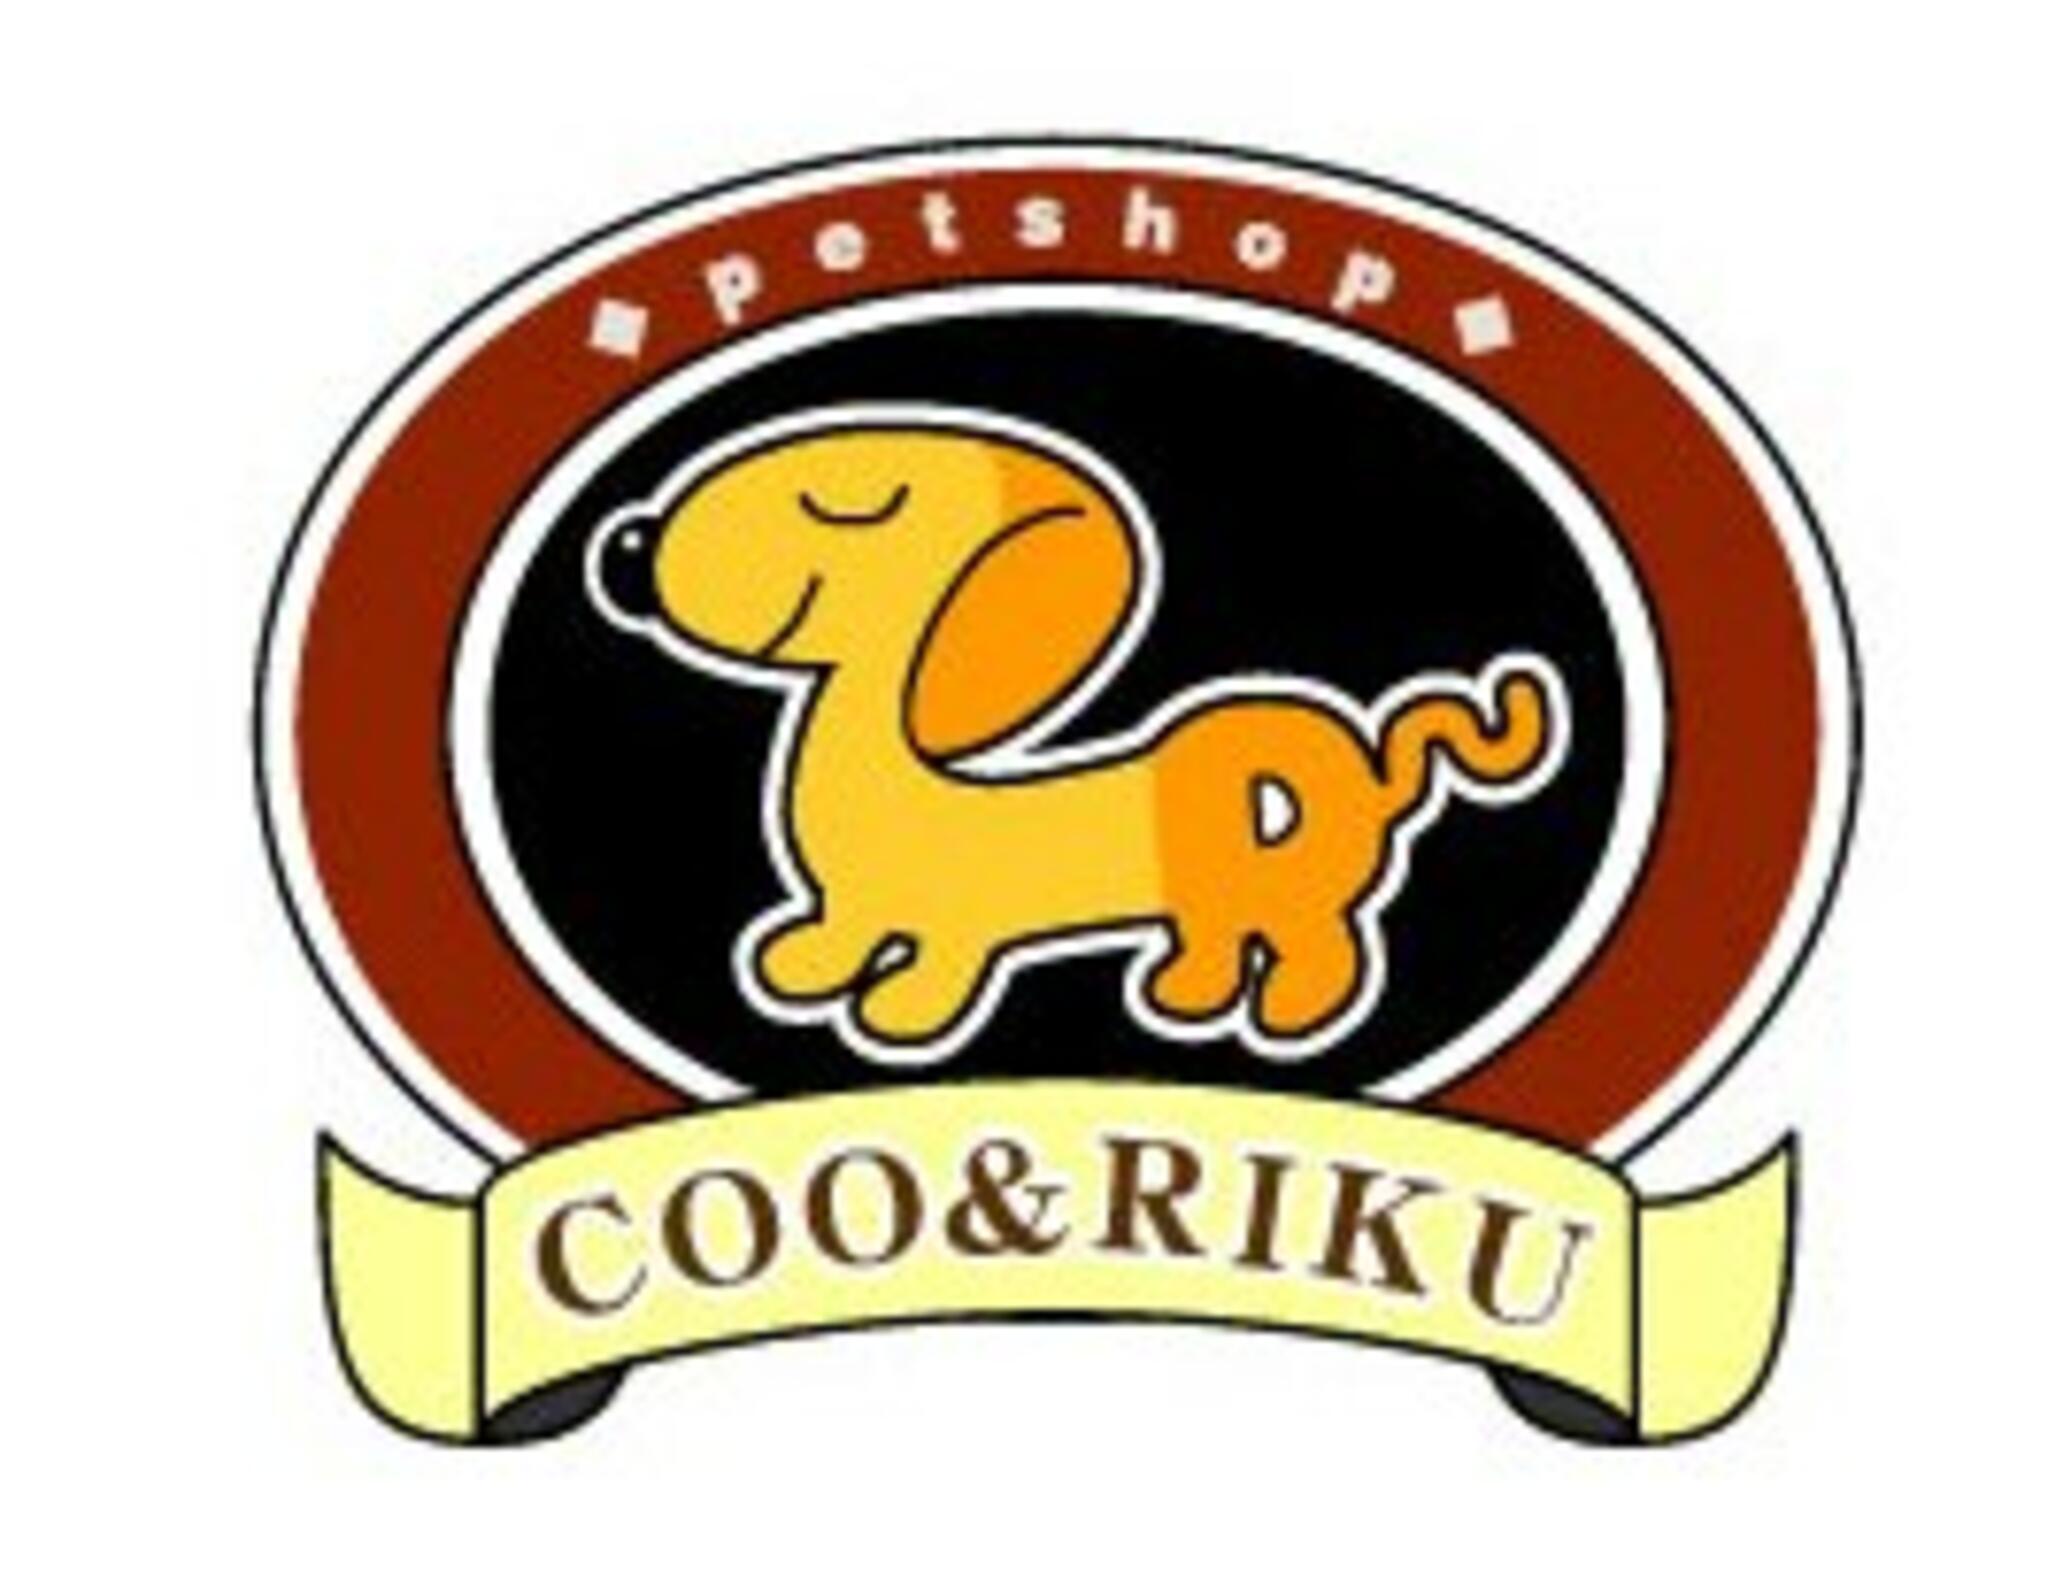 COO&RIKU 浜松店の代表写真4